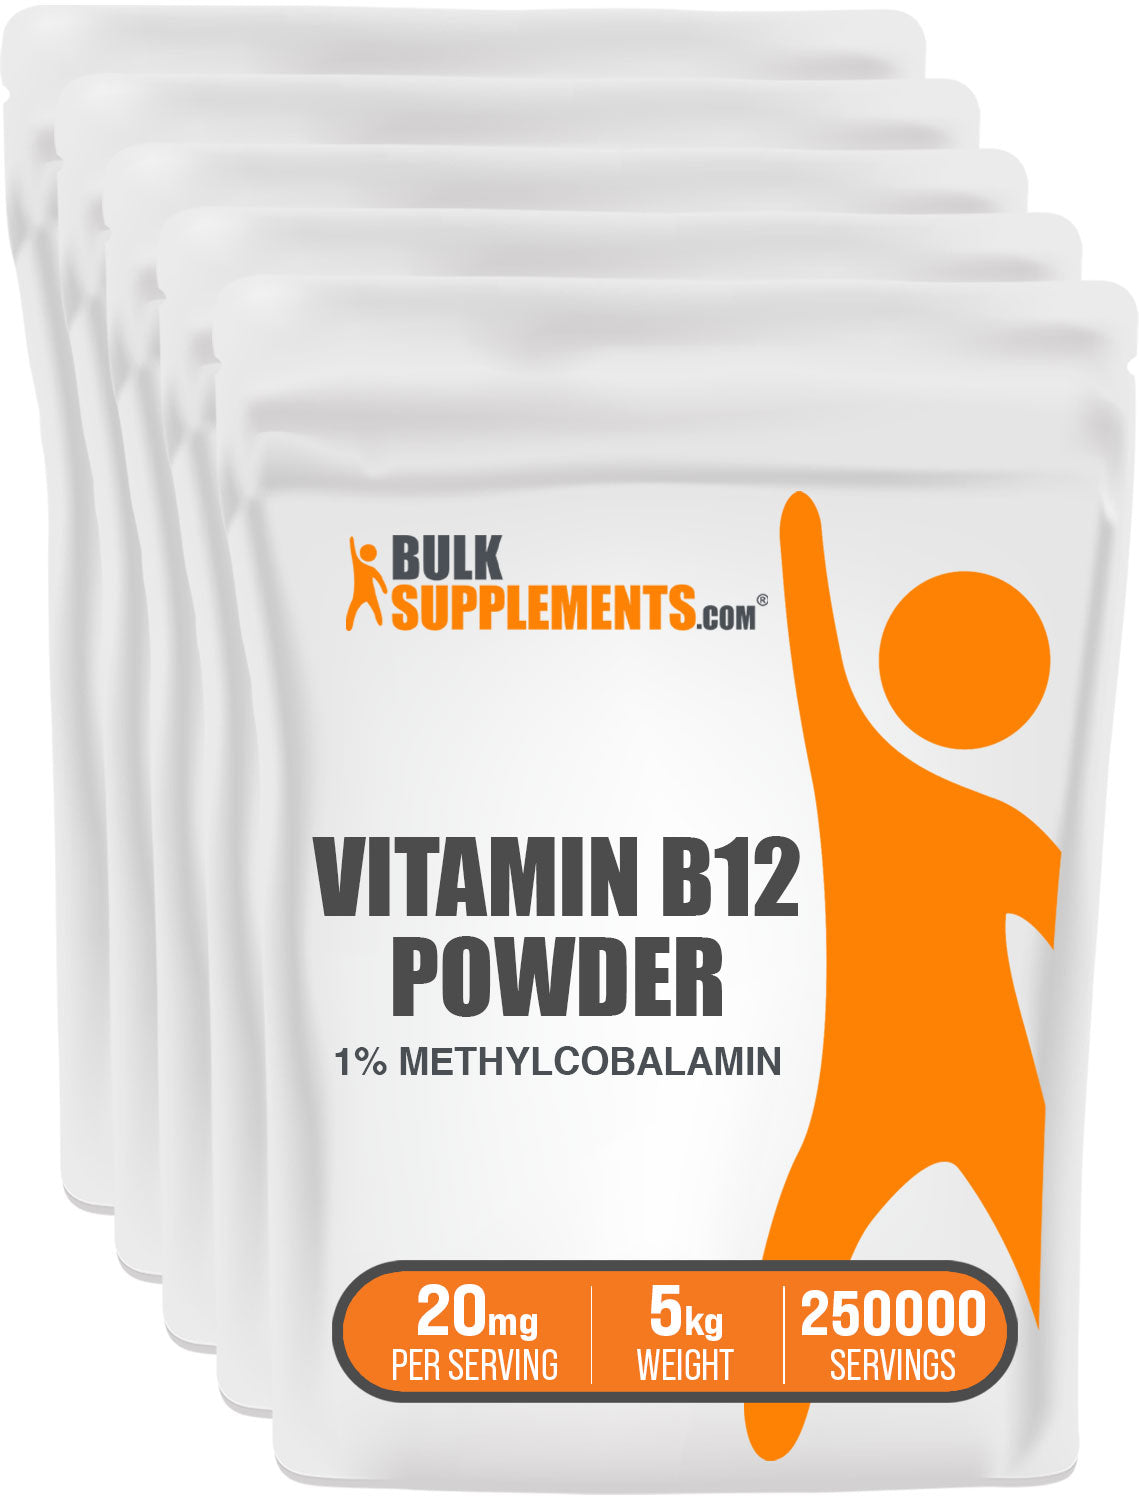 BulkSupplements Vitamin B12 Powder 1% Methylcobalamin 5kg bag